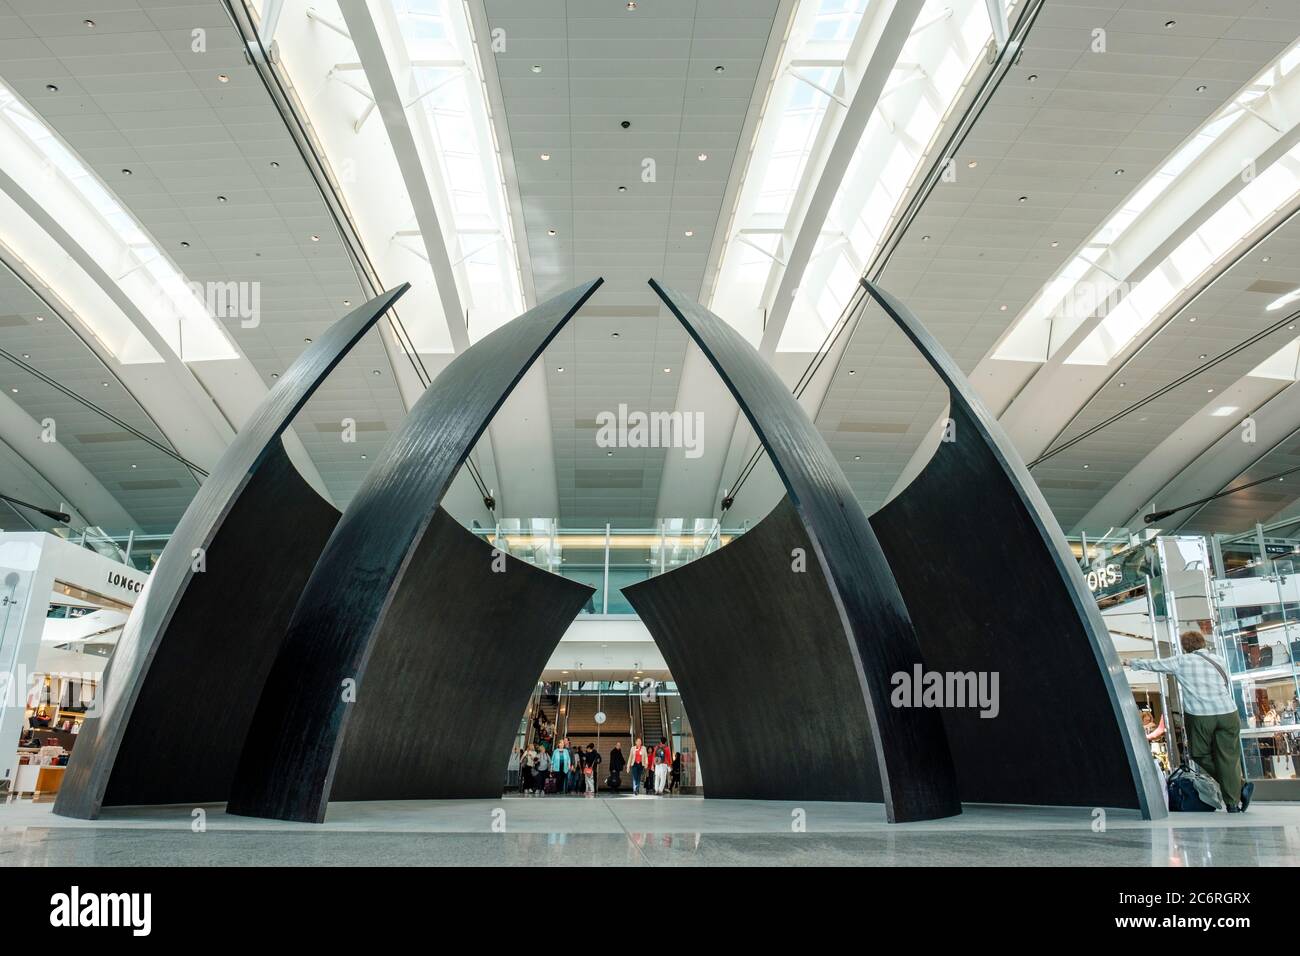 Richard Serra Tilted Spheres sculpture, Pearson International Airport, Terminal 1, International Departures, Toronto, Ontario, Canada Stock Photo